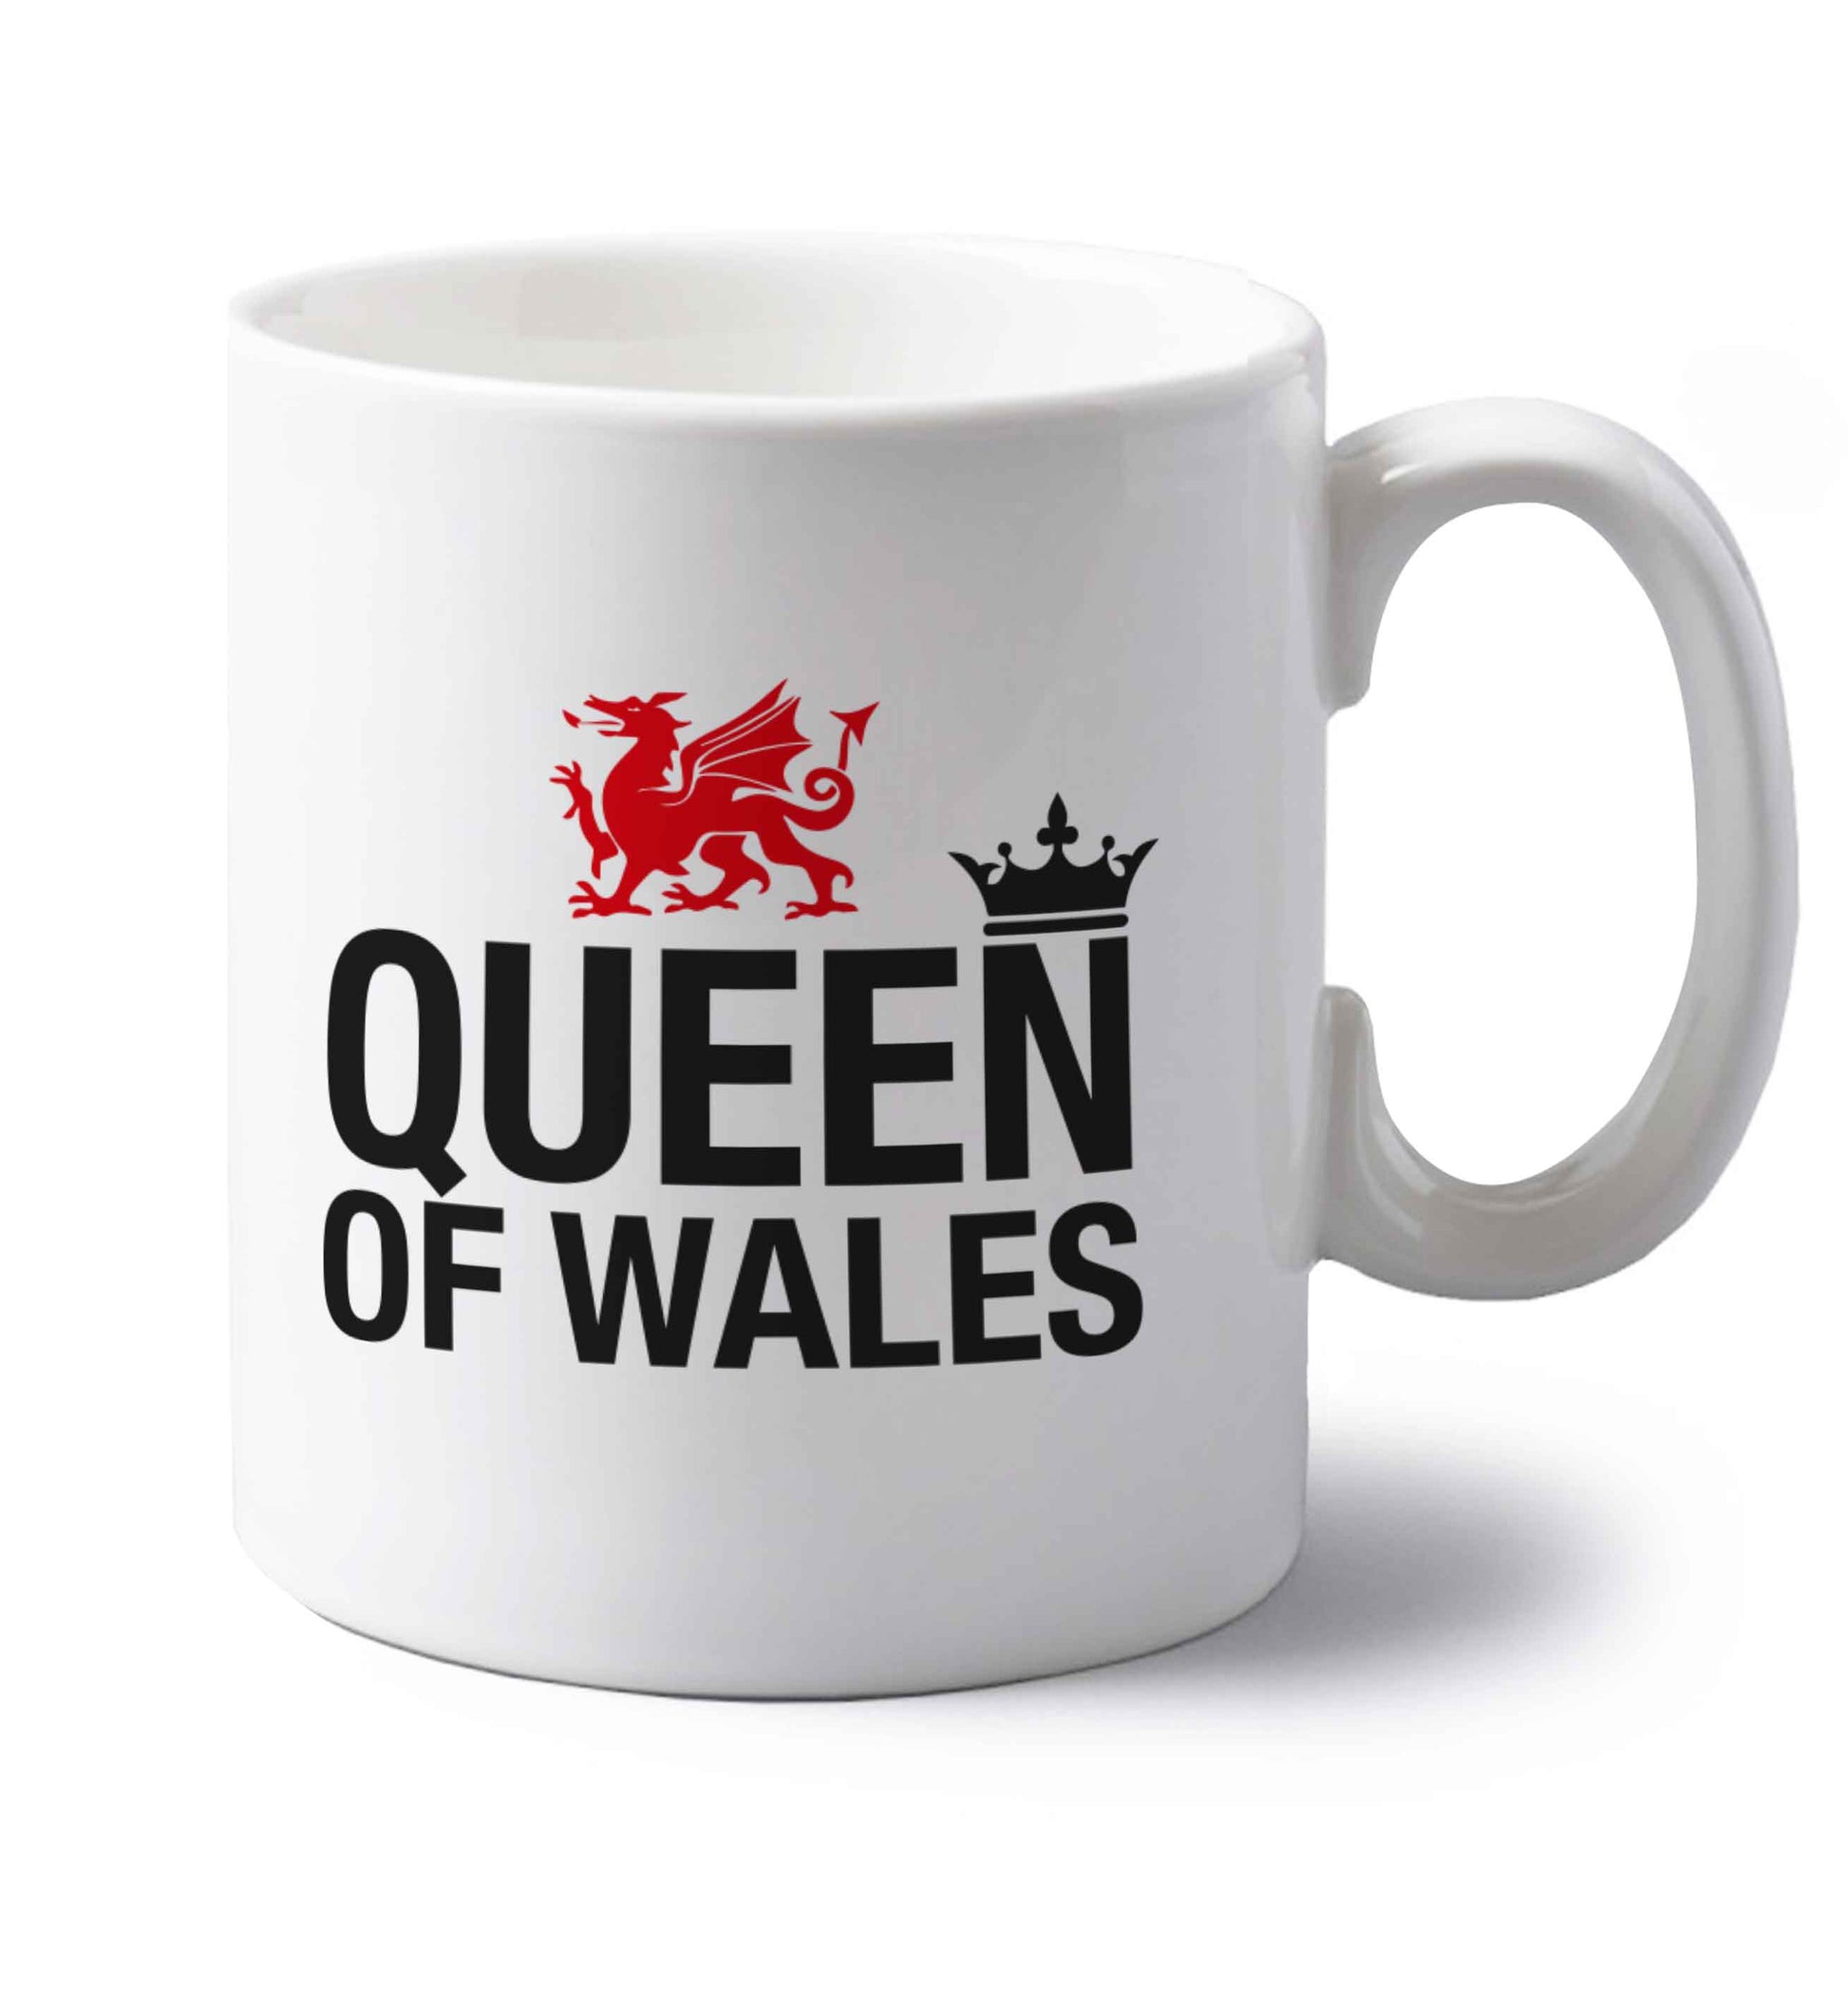 Queen of Wales left handed white ceramic mug 